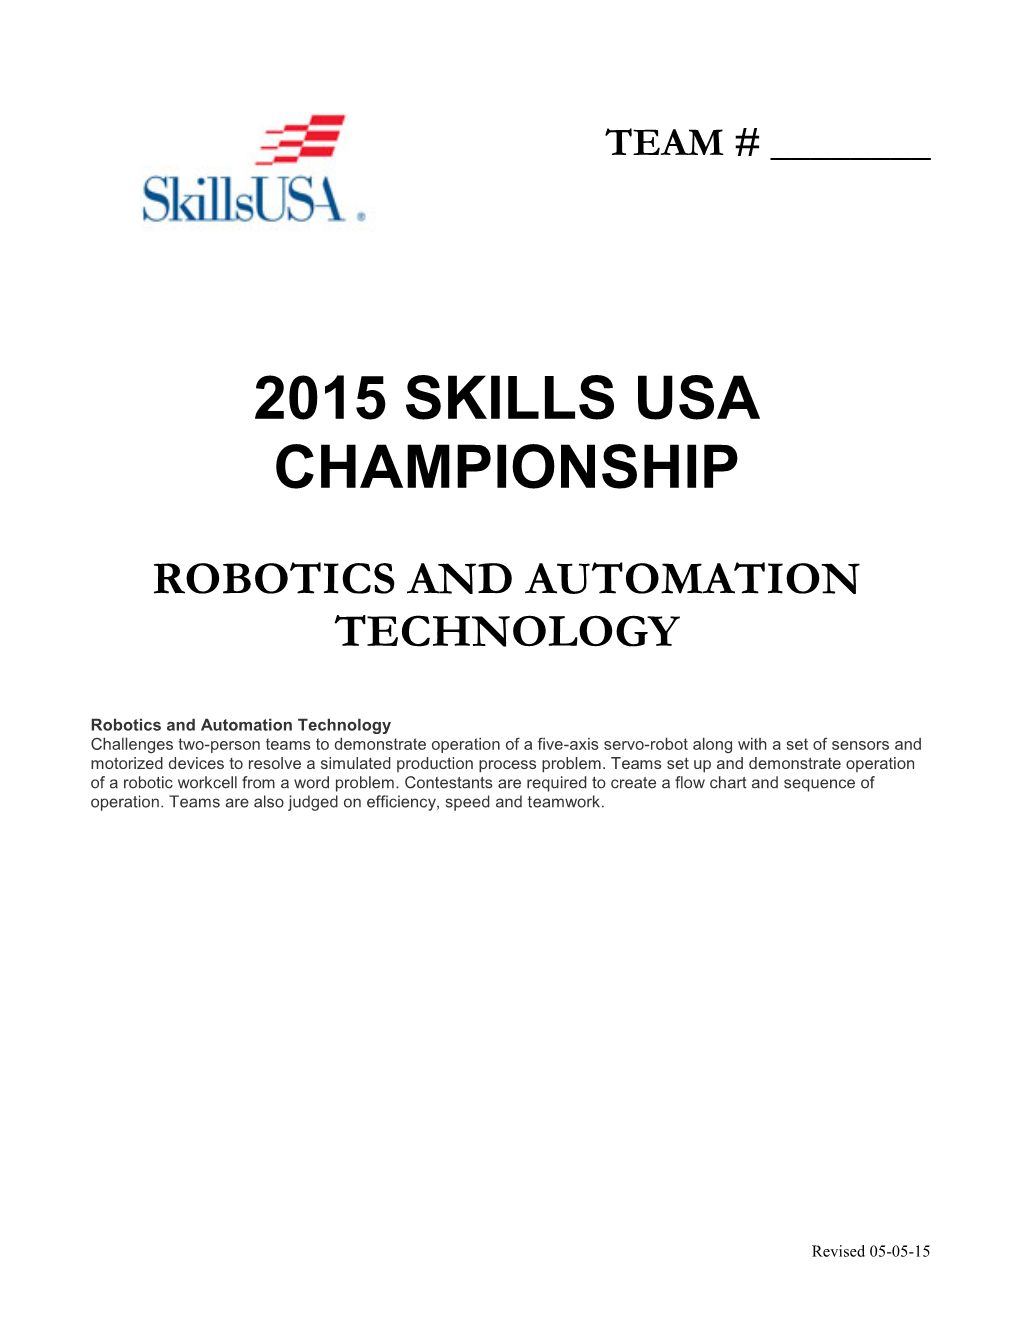 2015 Skills Usa Championship Robotics and Automation Technology